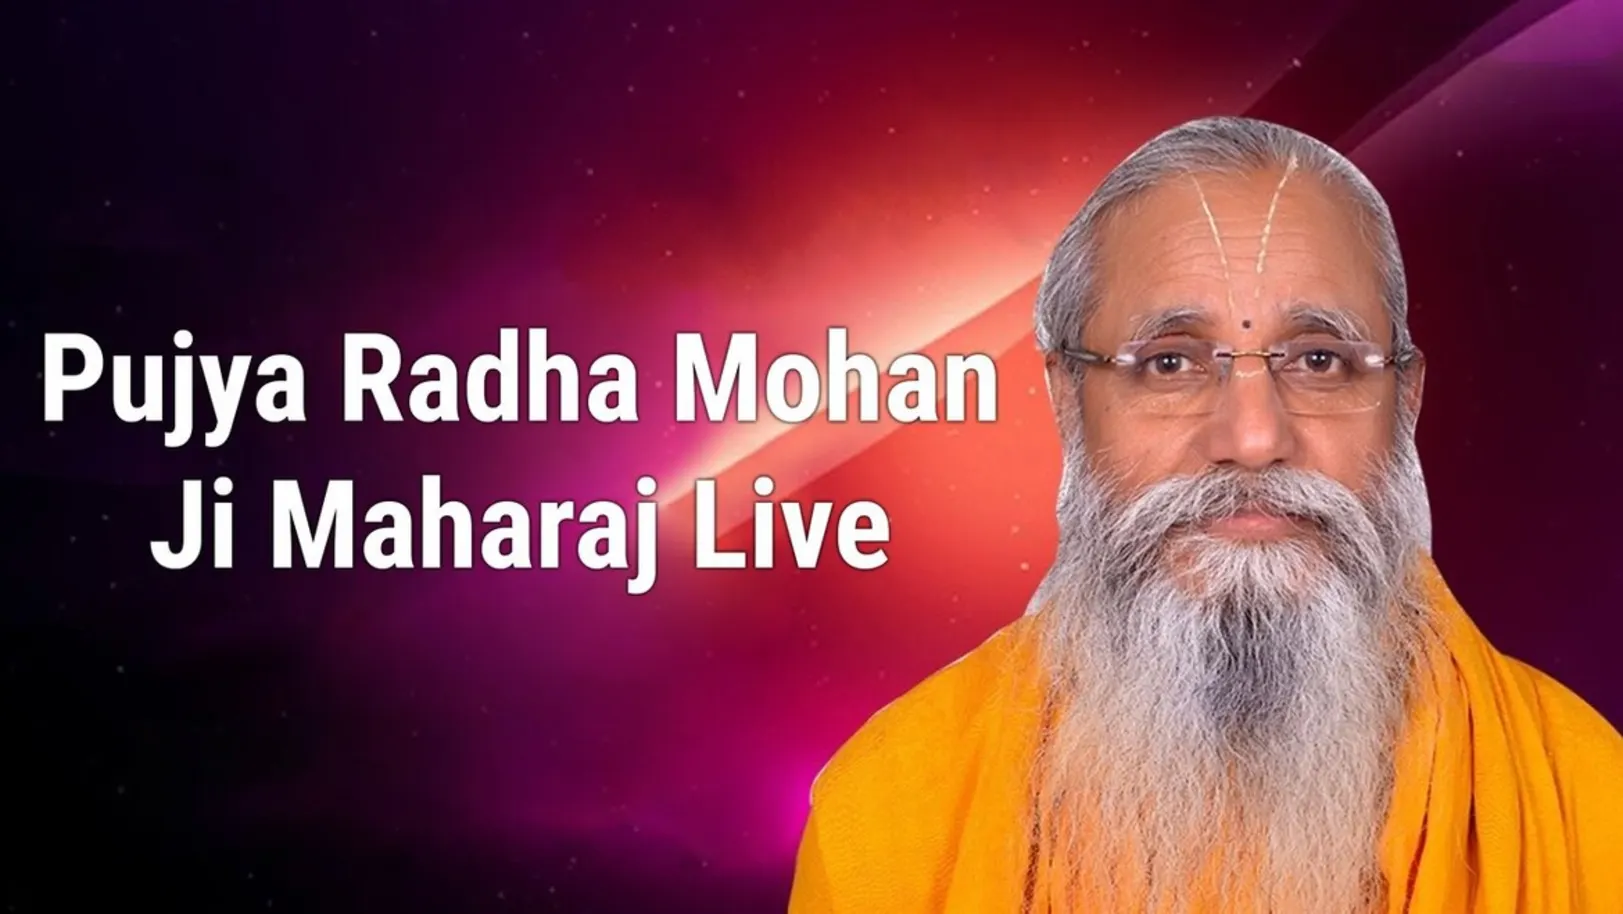 Pujya Radha Mohan Ji Maharaj Live Streaming Now On Sanskar TV